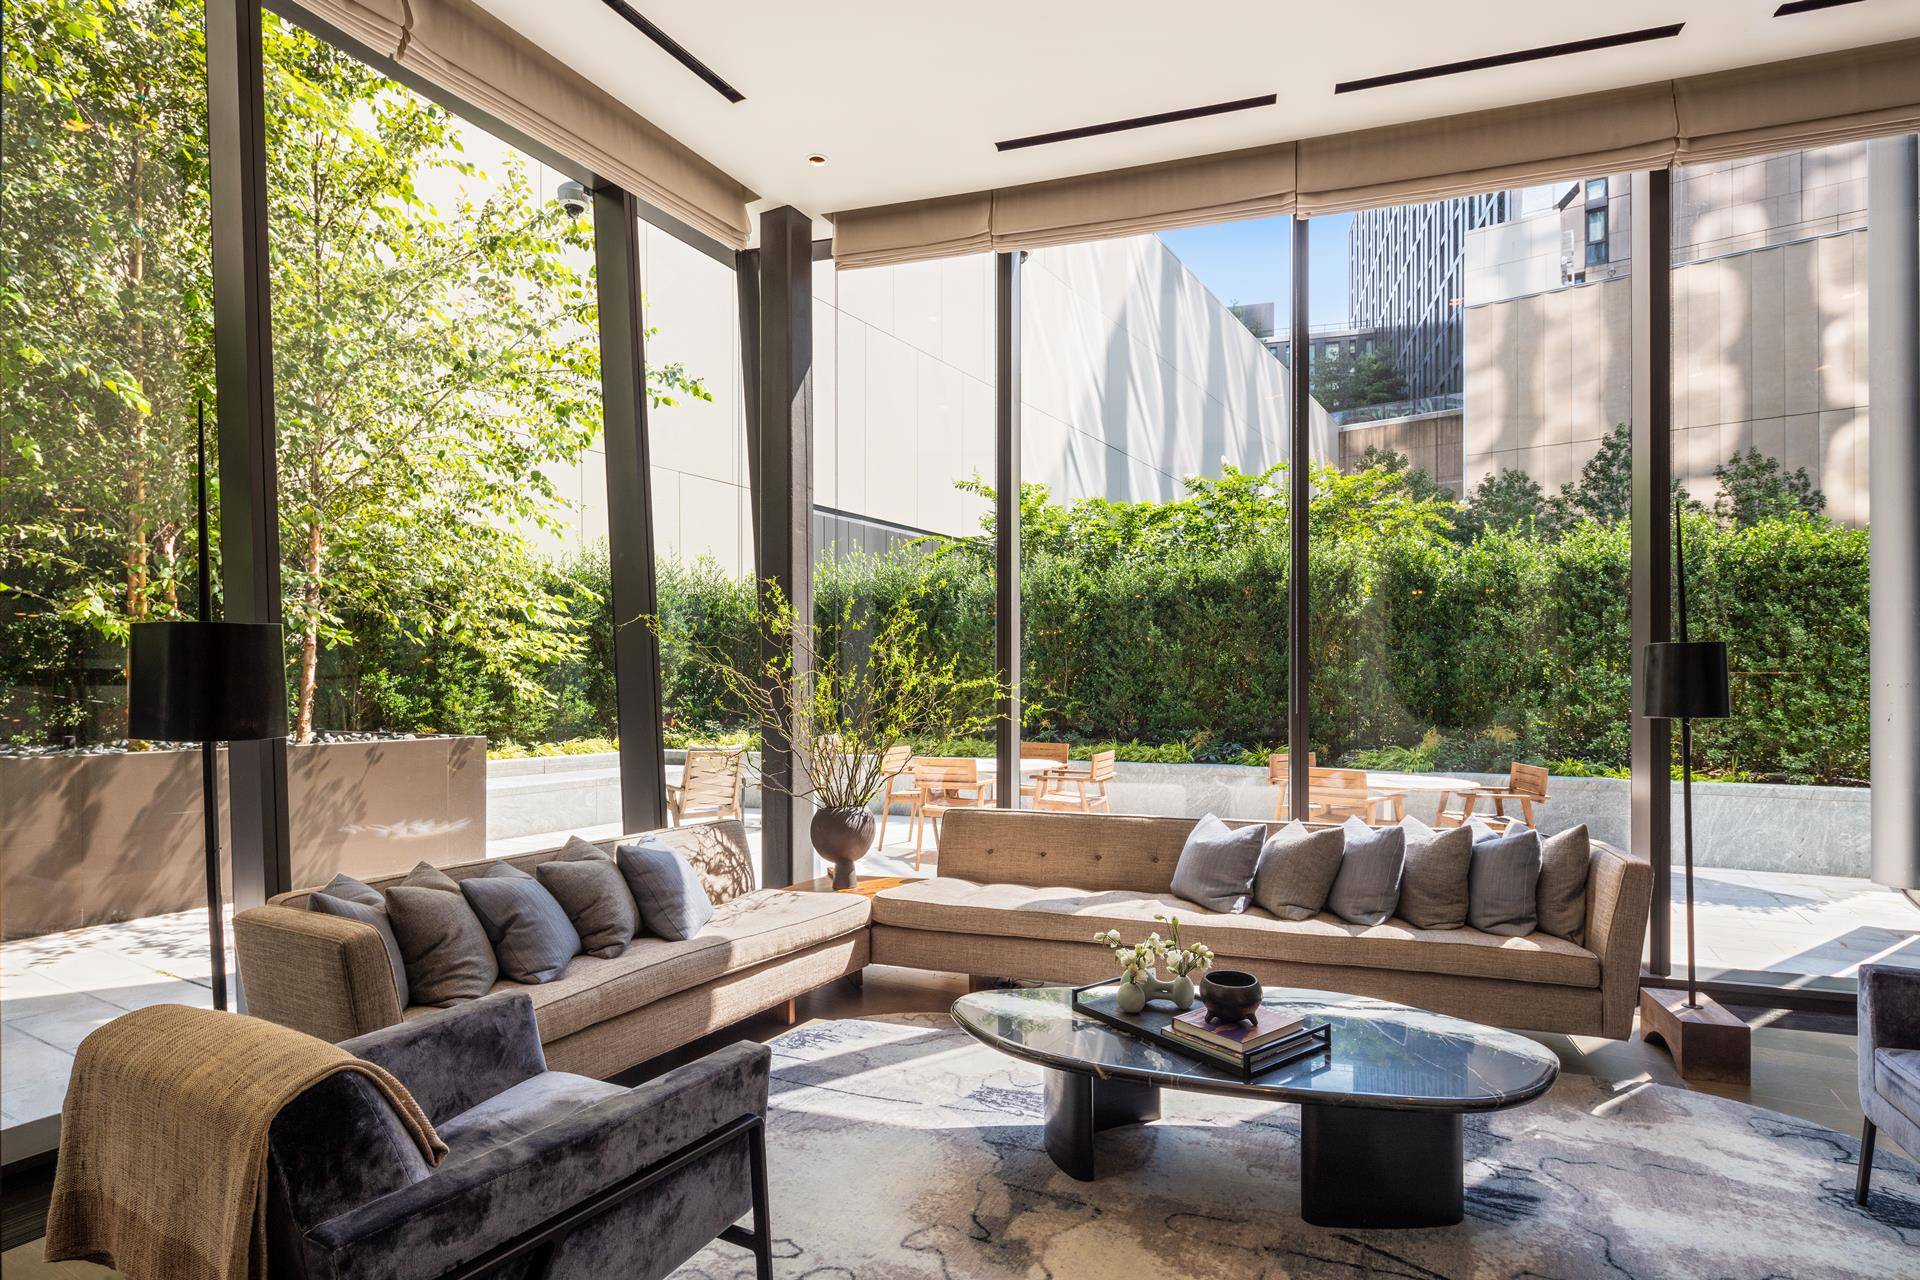 Luxury 1 bedroom, 1 bathroom at TriBeCa's newest global landmark condominium.